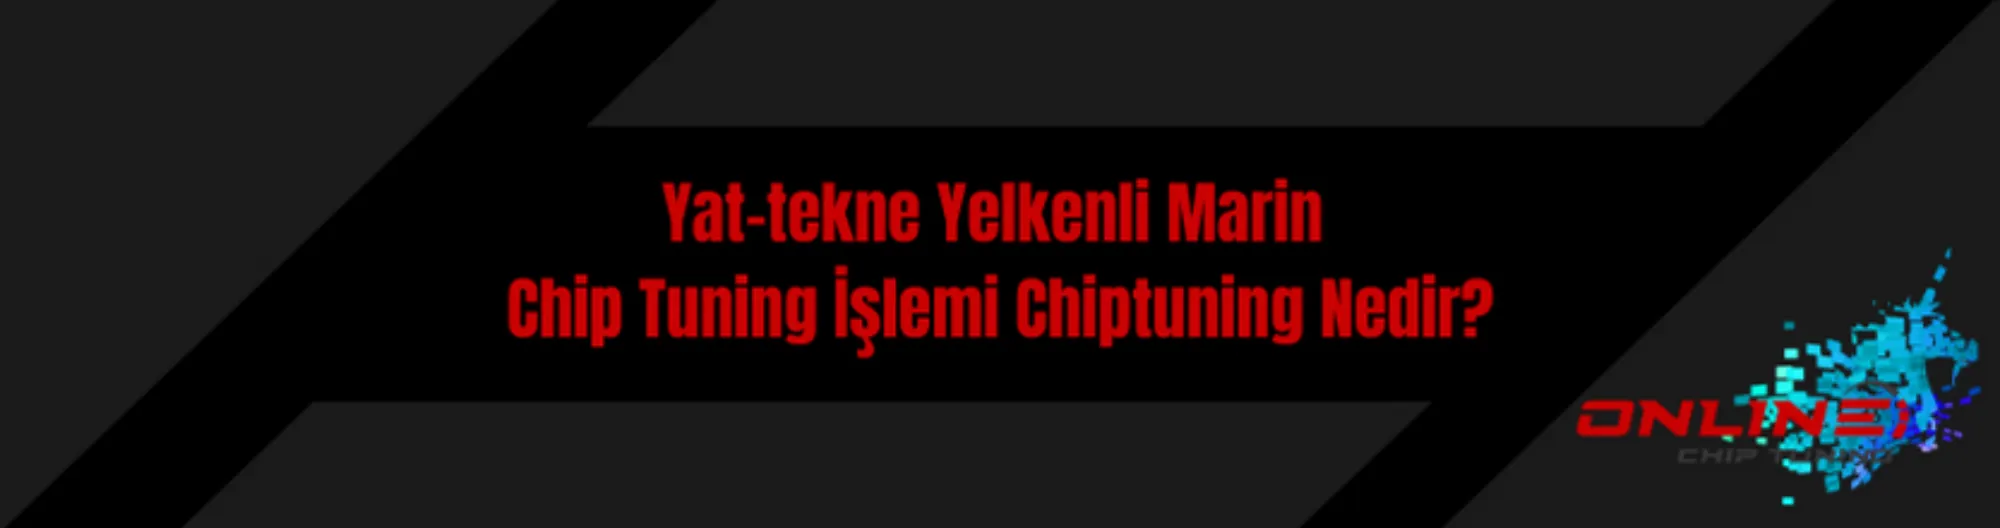 Yat-tekne Yelkenli Marin Chip Tuning İşlemi Chiptuning Nedi̇r ?